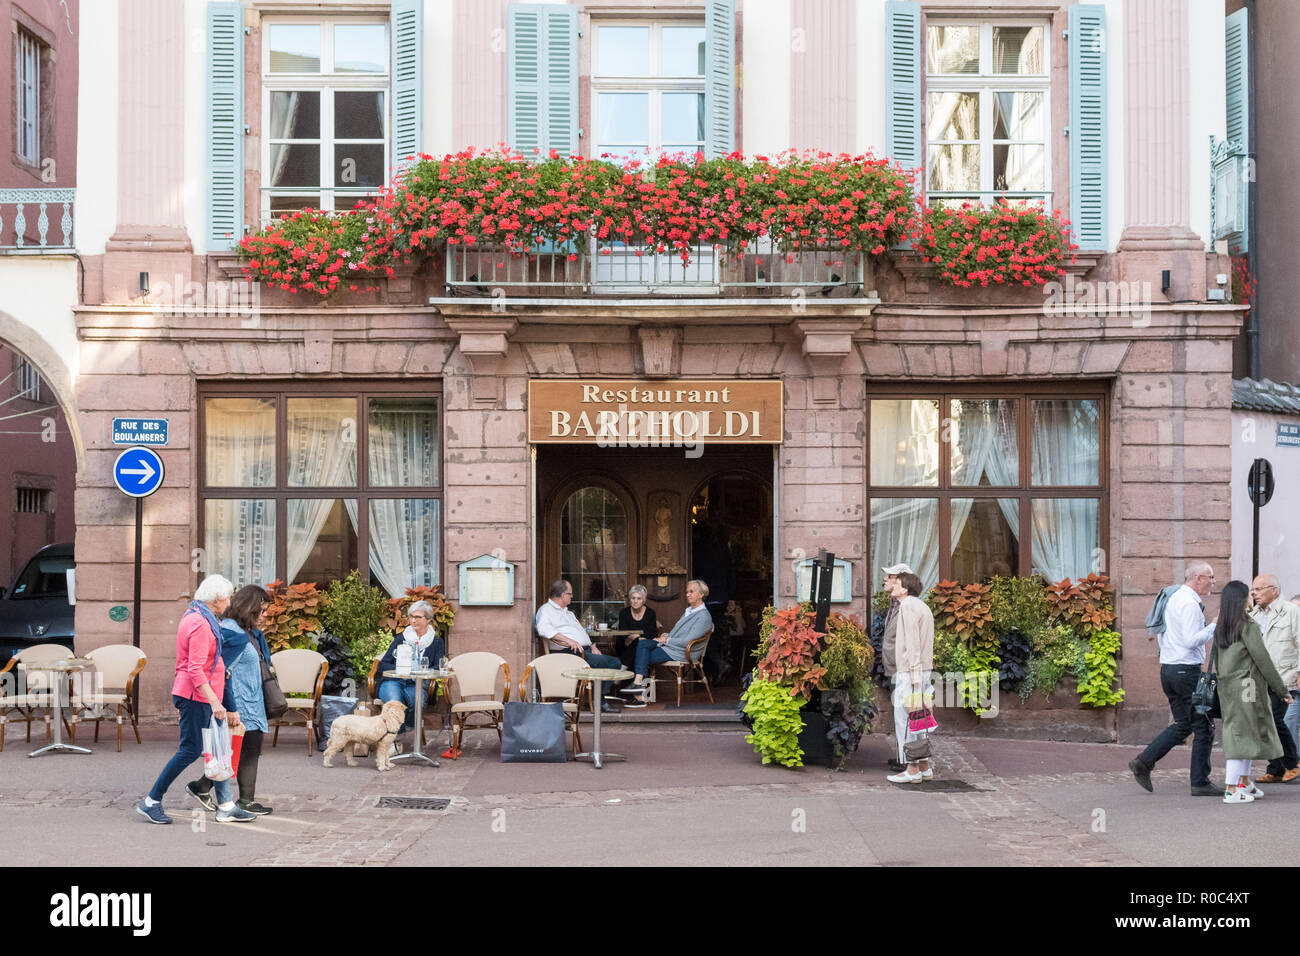 Restaurant Bartholdi, Colmar, Alsace, France Stock Photo